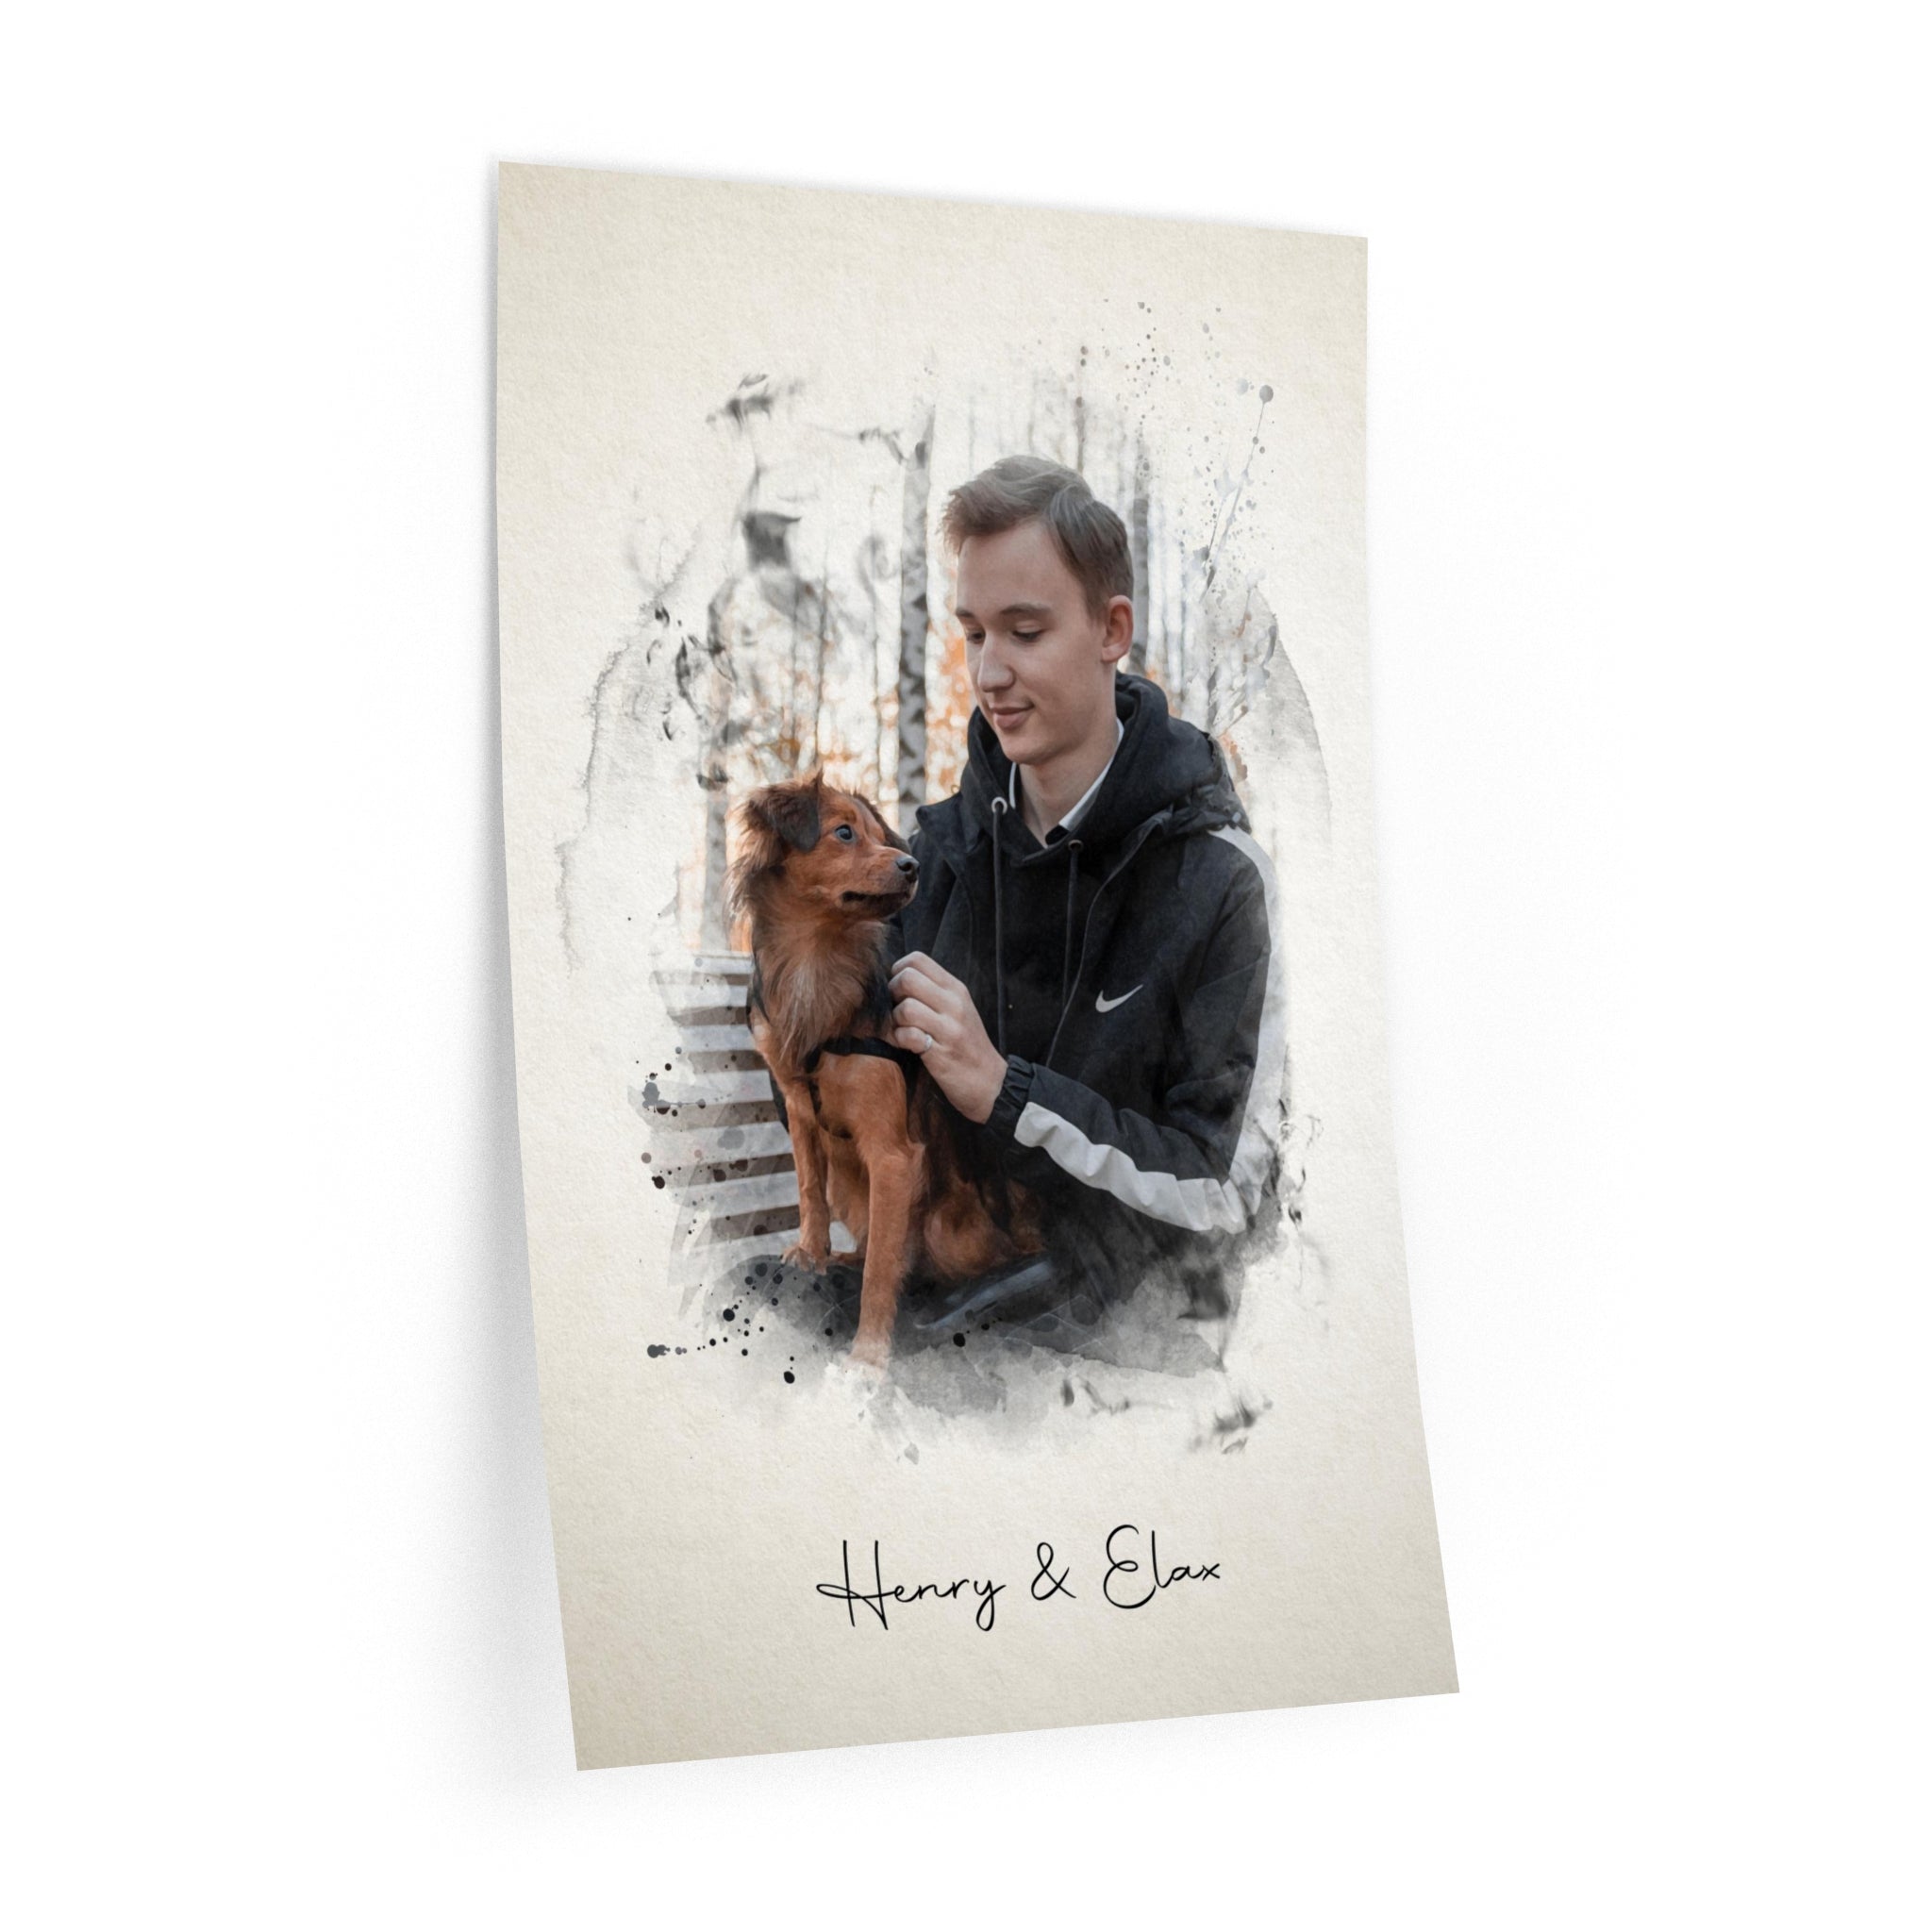 Custom dog portrait memorializing beloved pet for a thoughtful sympathy gift.